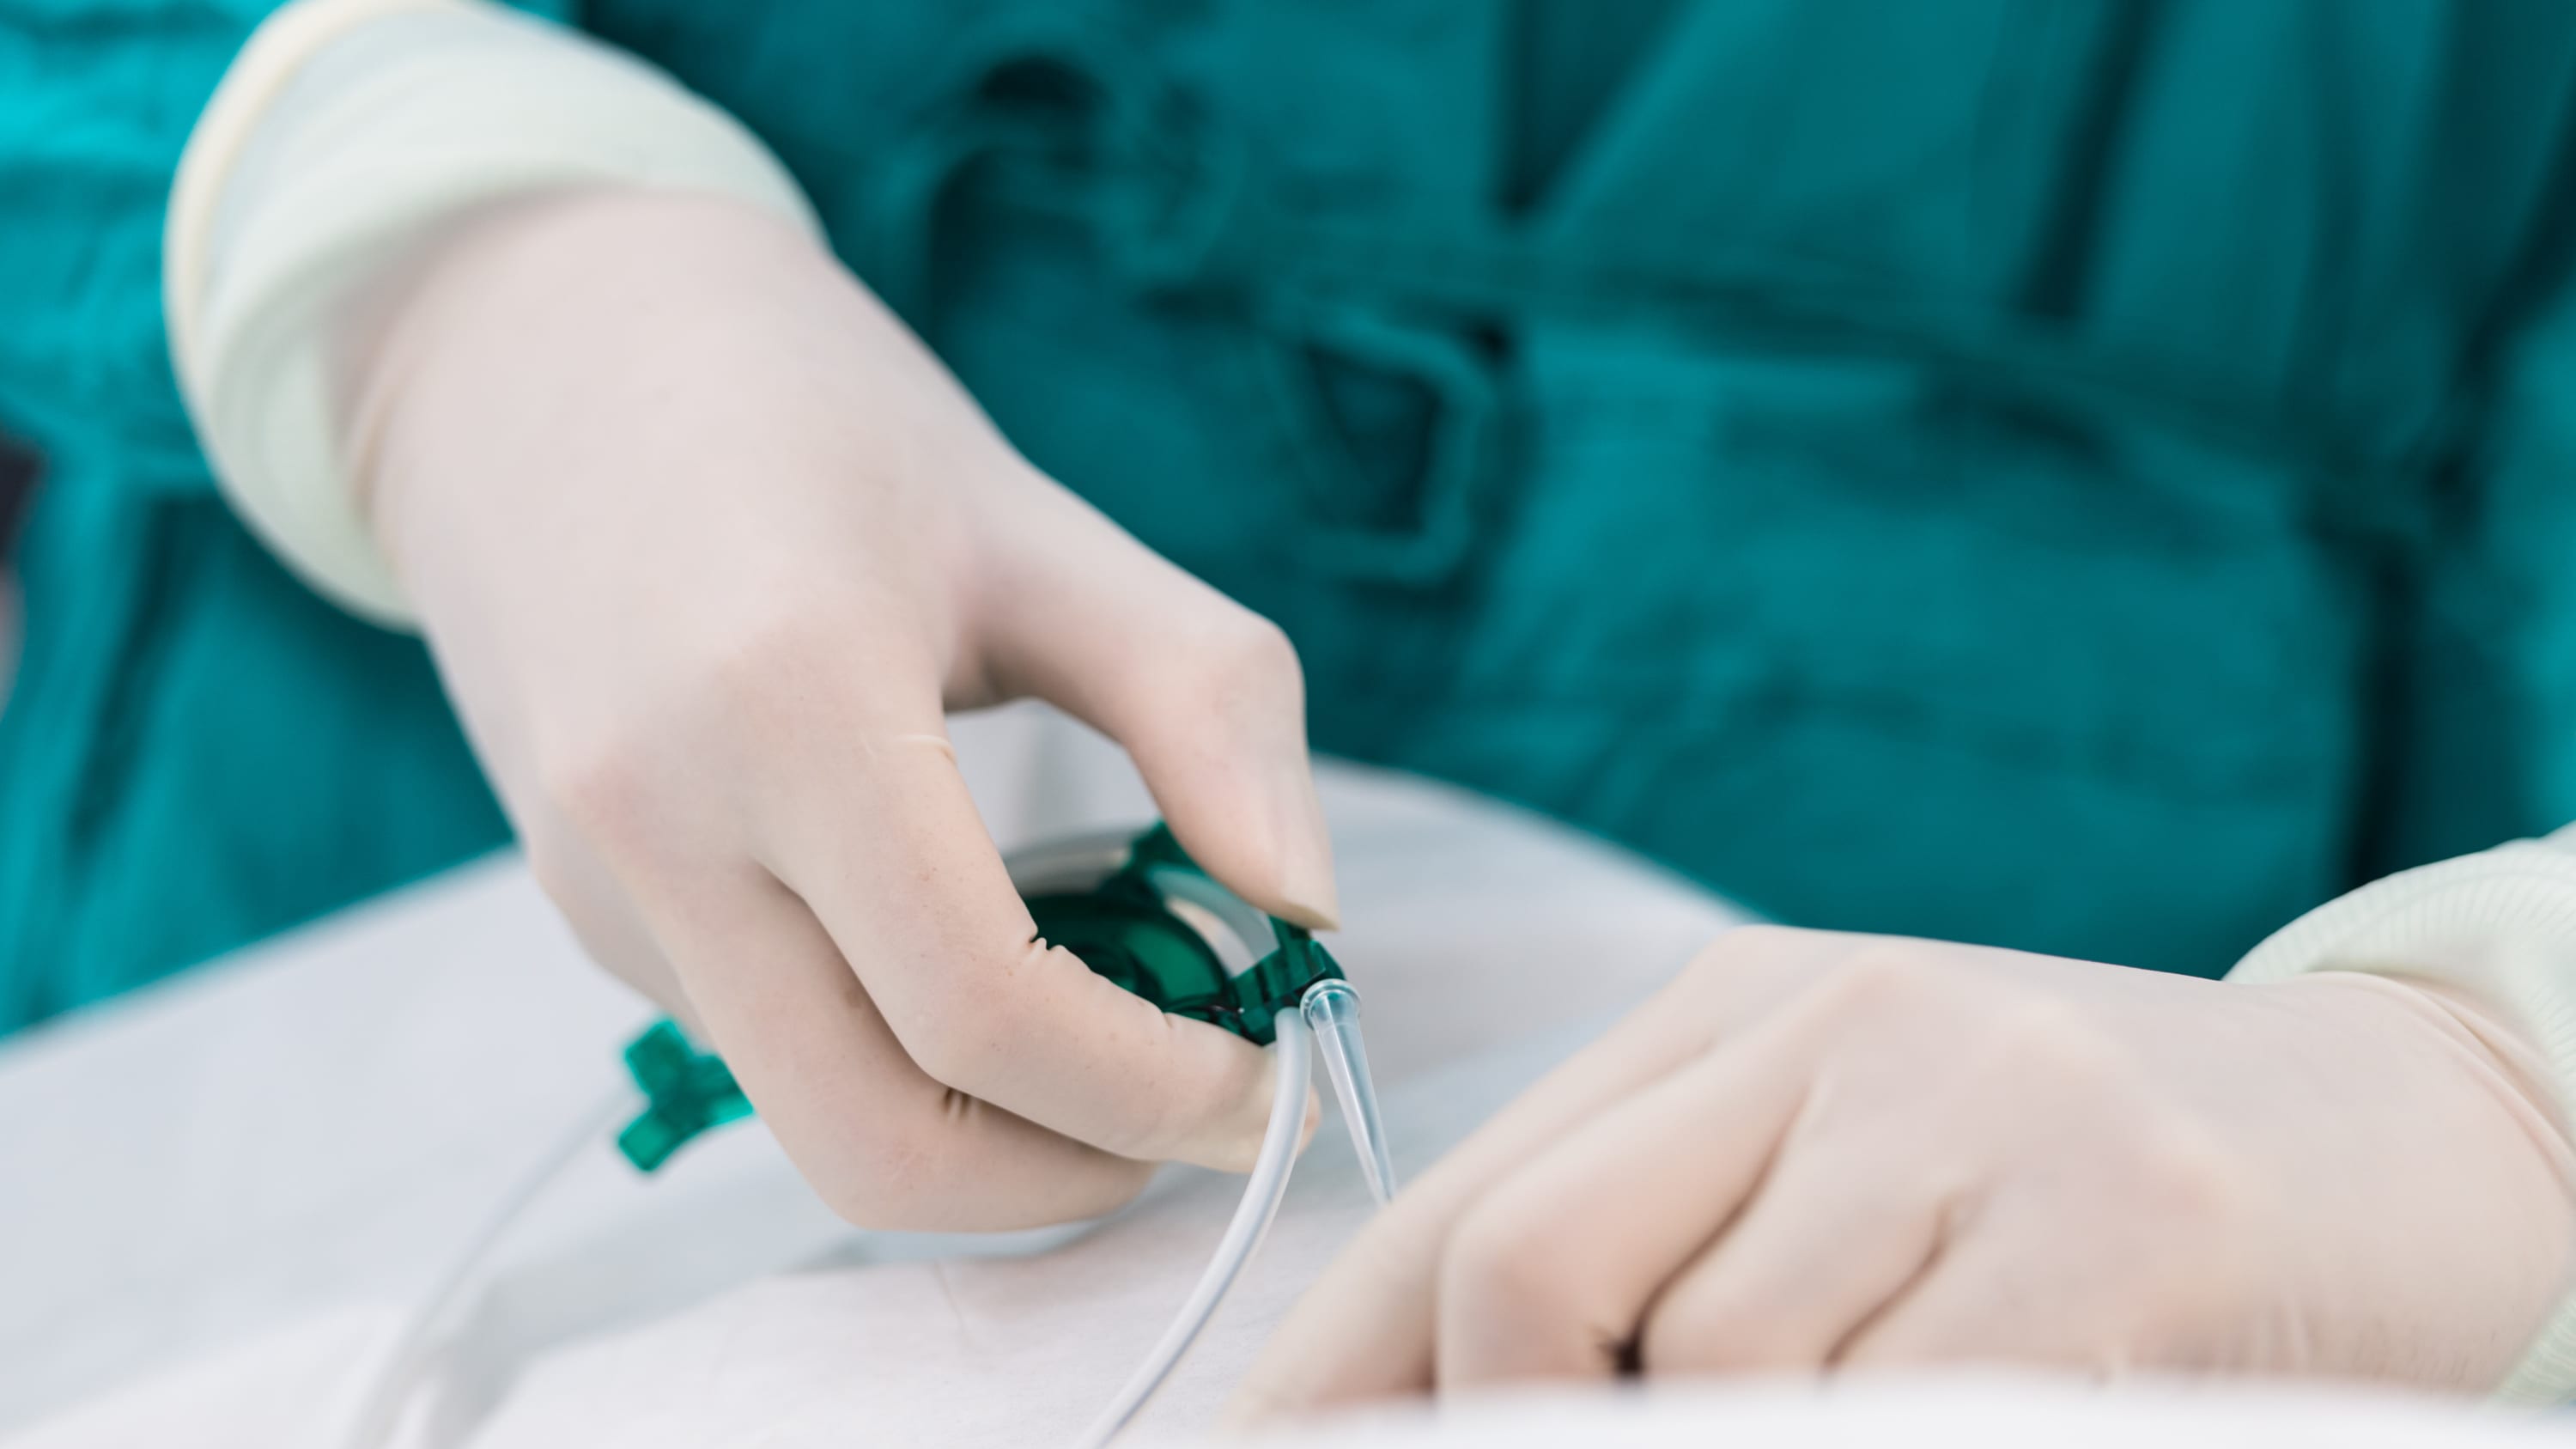 A nurse holding a piece of equipment during an endovascular brain surgery procedure.